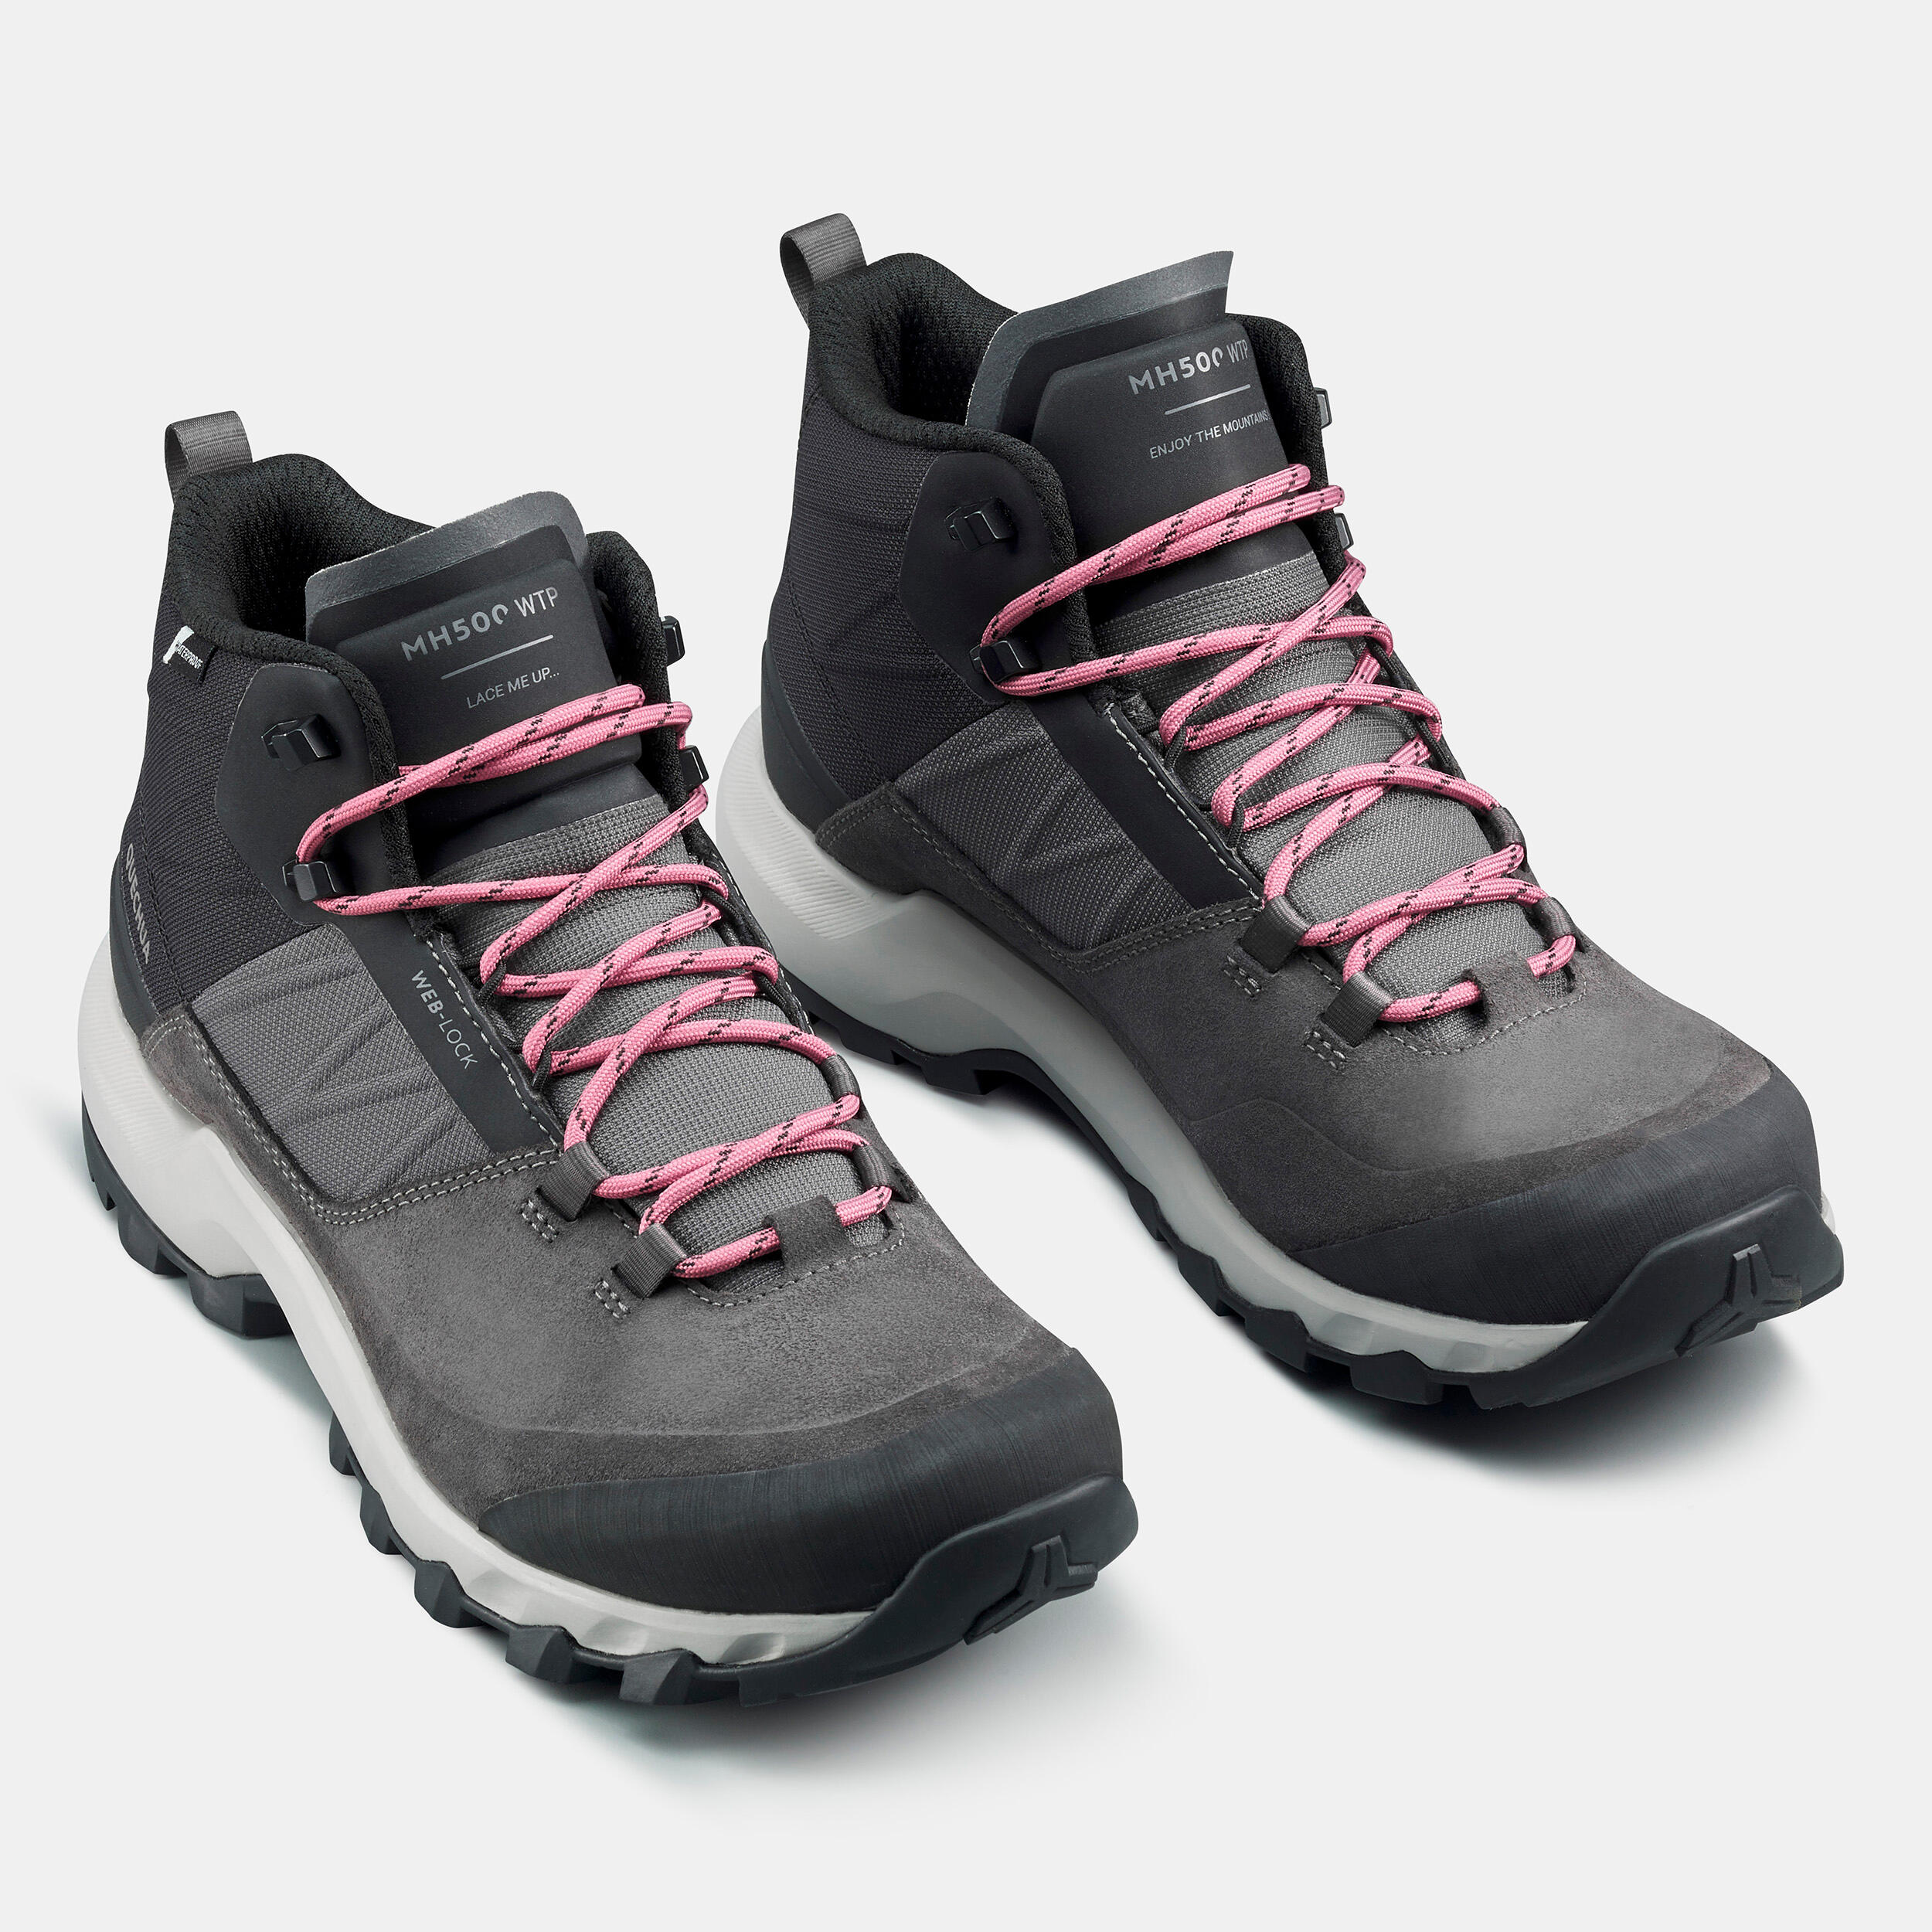 Women's Waterproof Mountain Walking Shoes - MH500 MID Grey 5/6